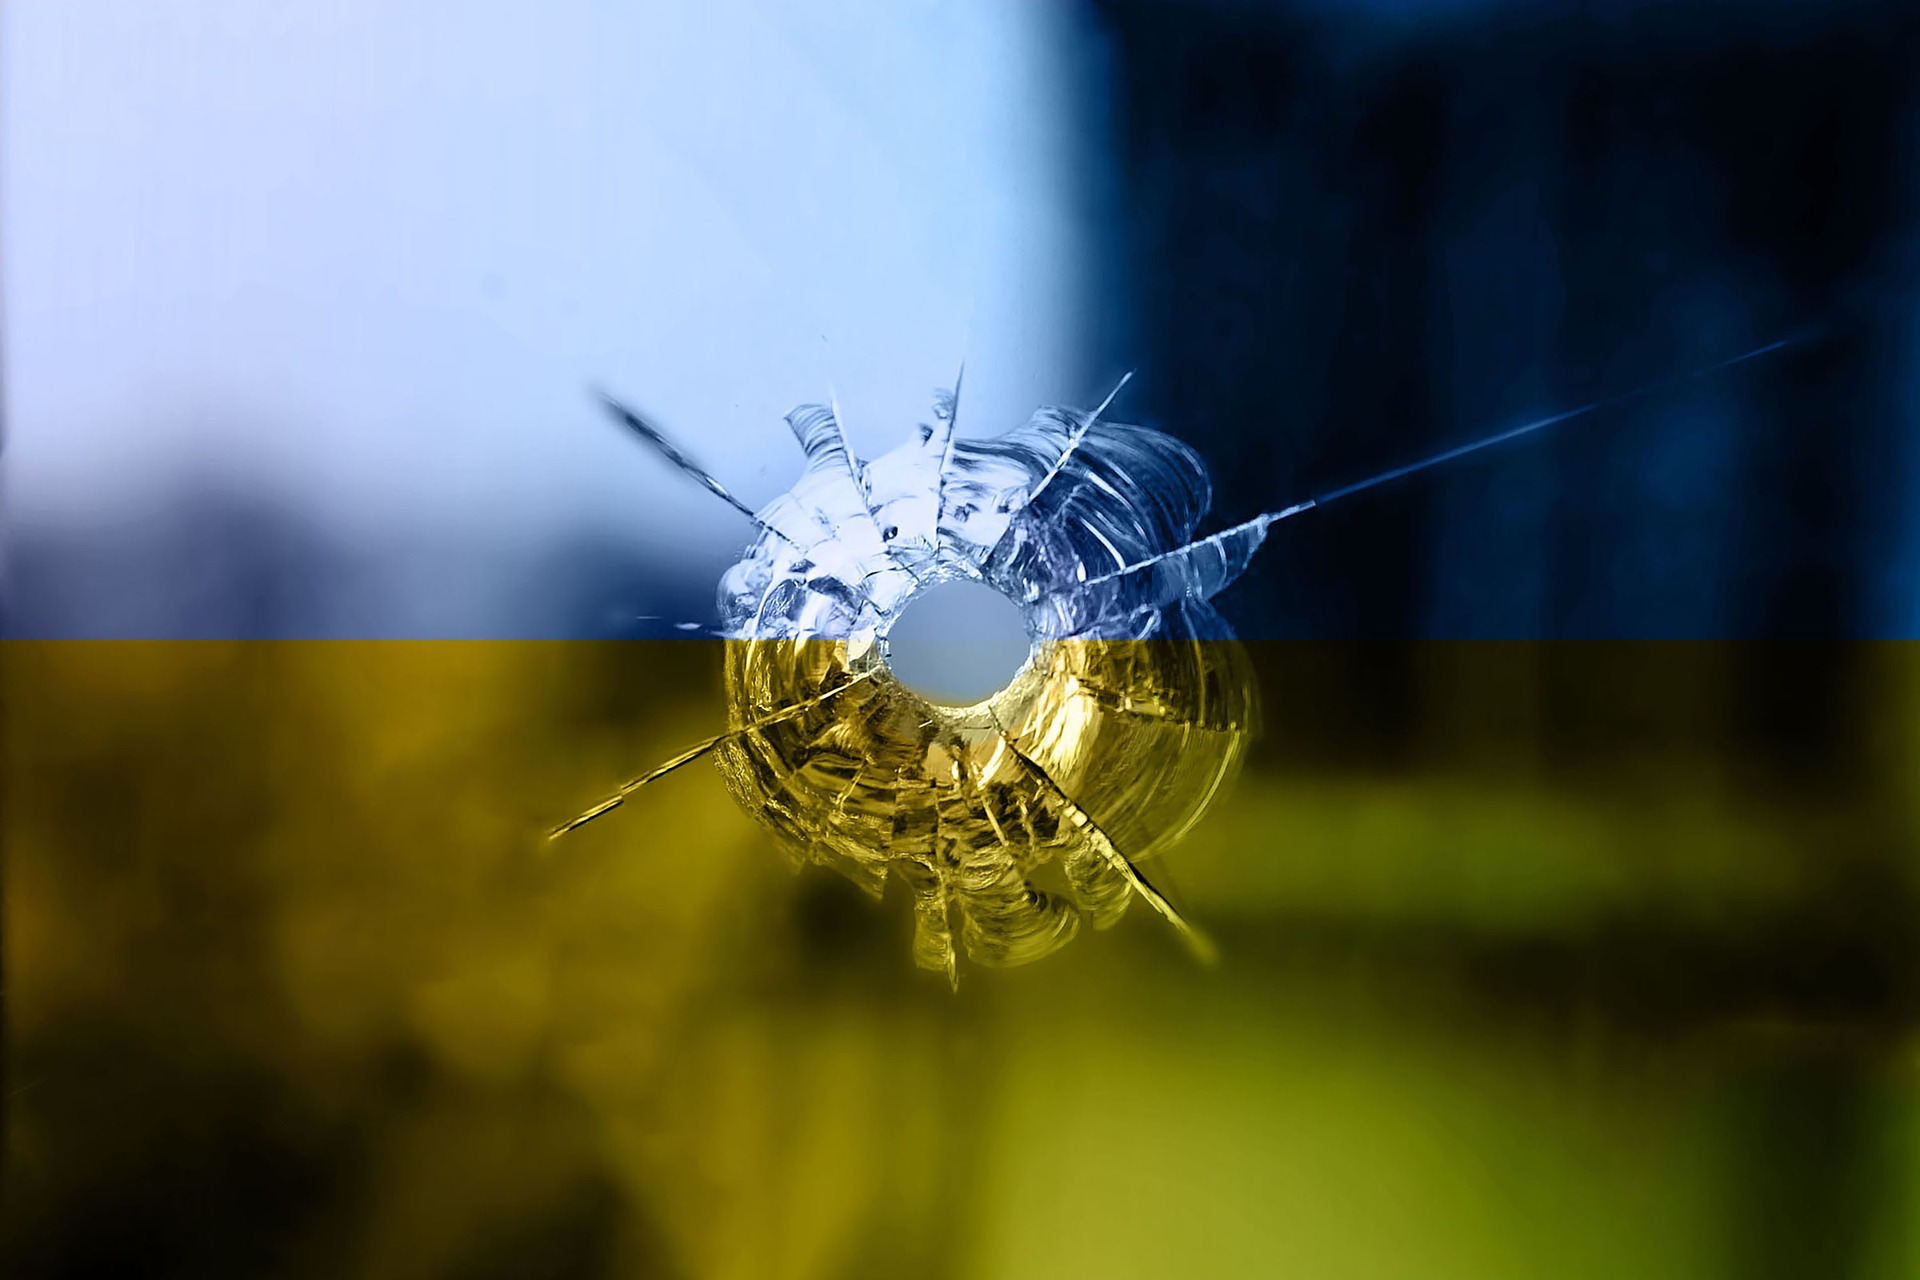 Royalty free image from https://pixabay.com/photos/bullet-hole-ukraine-flag-7075401/